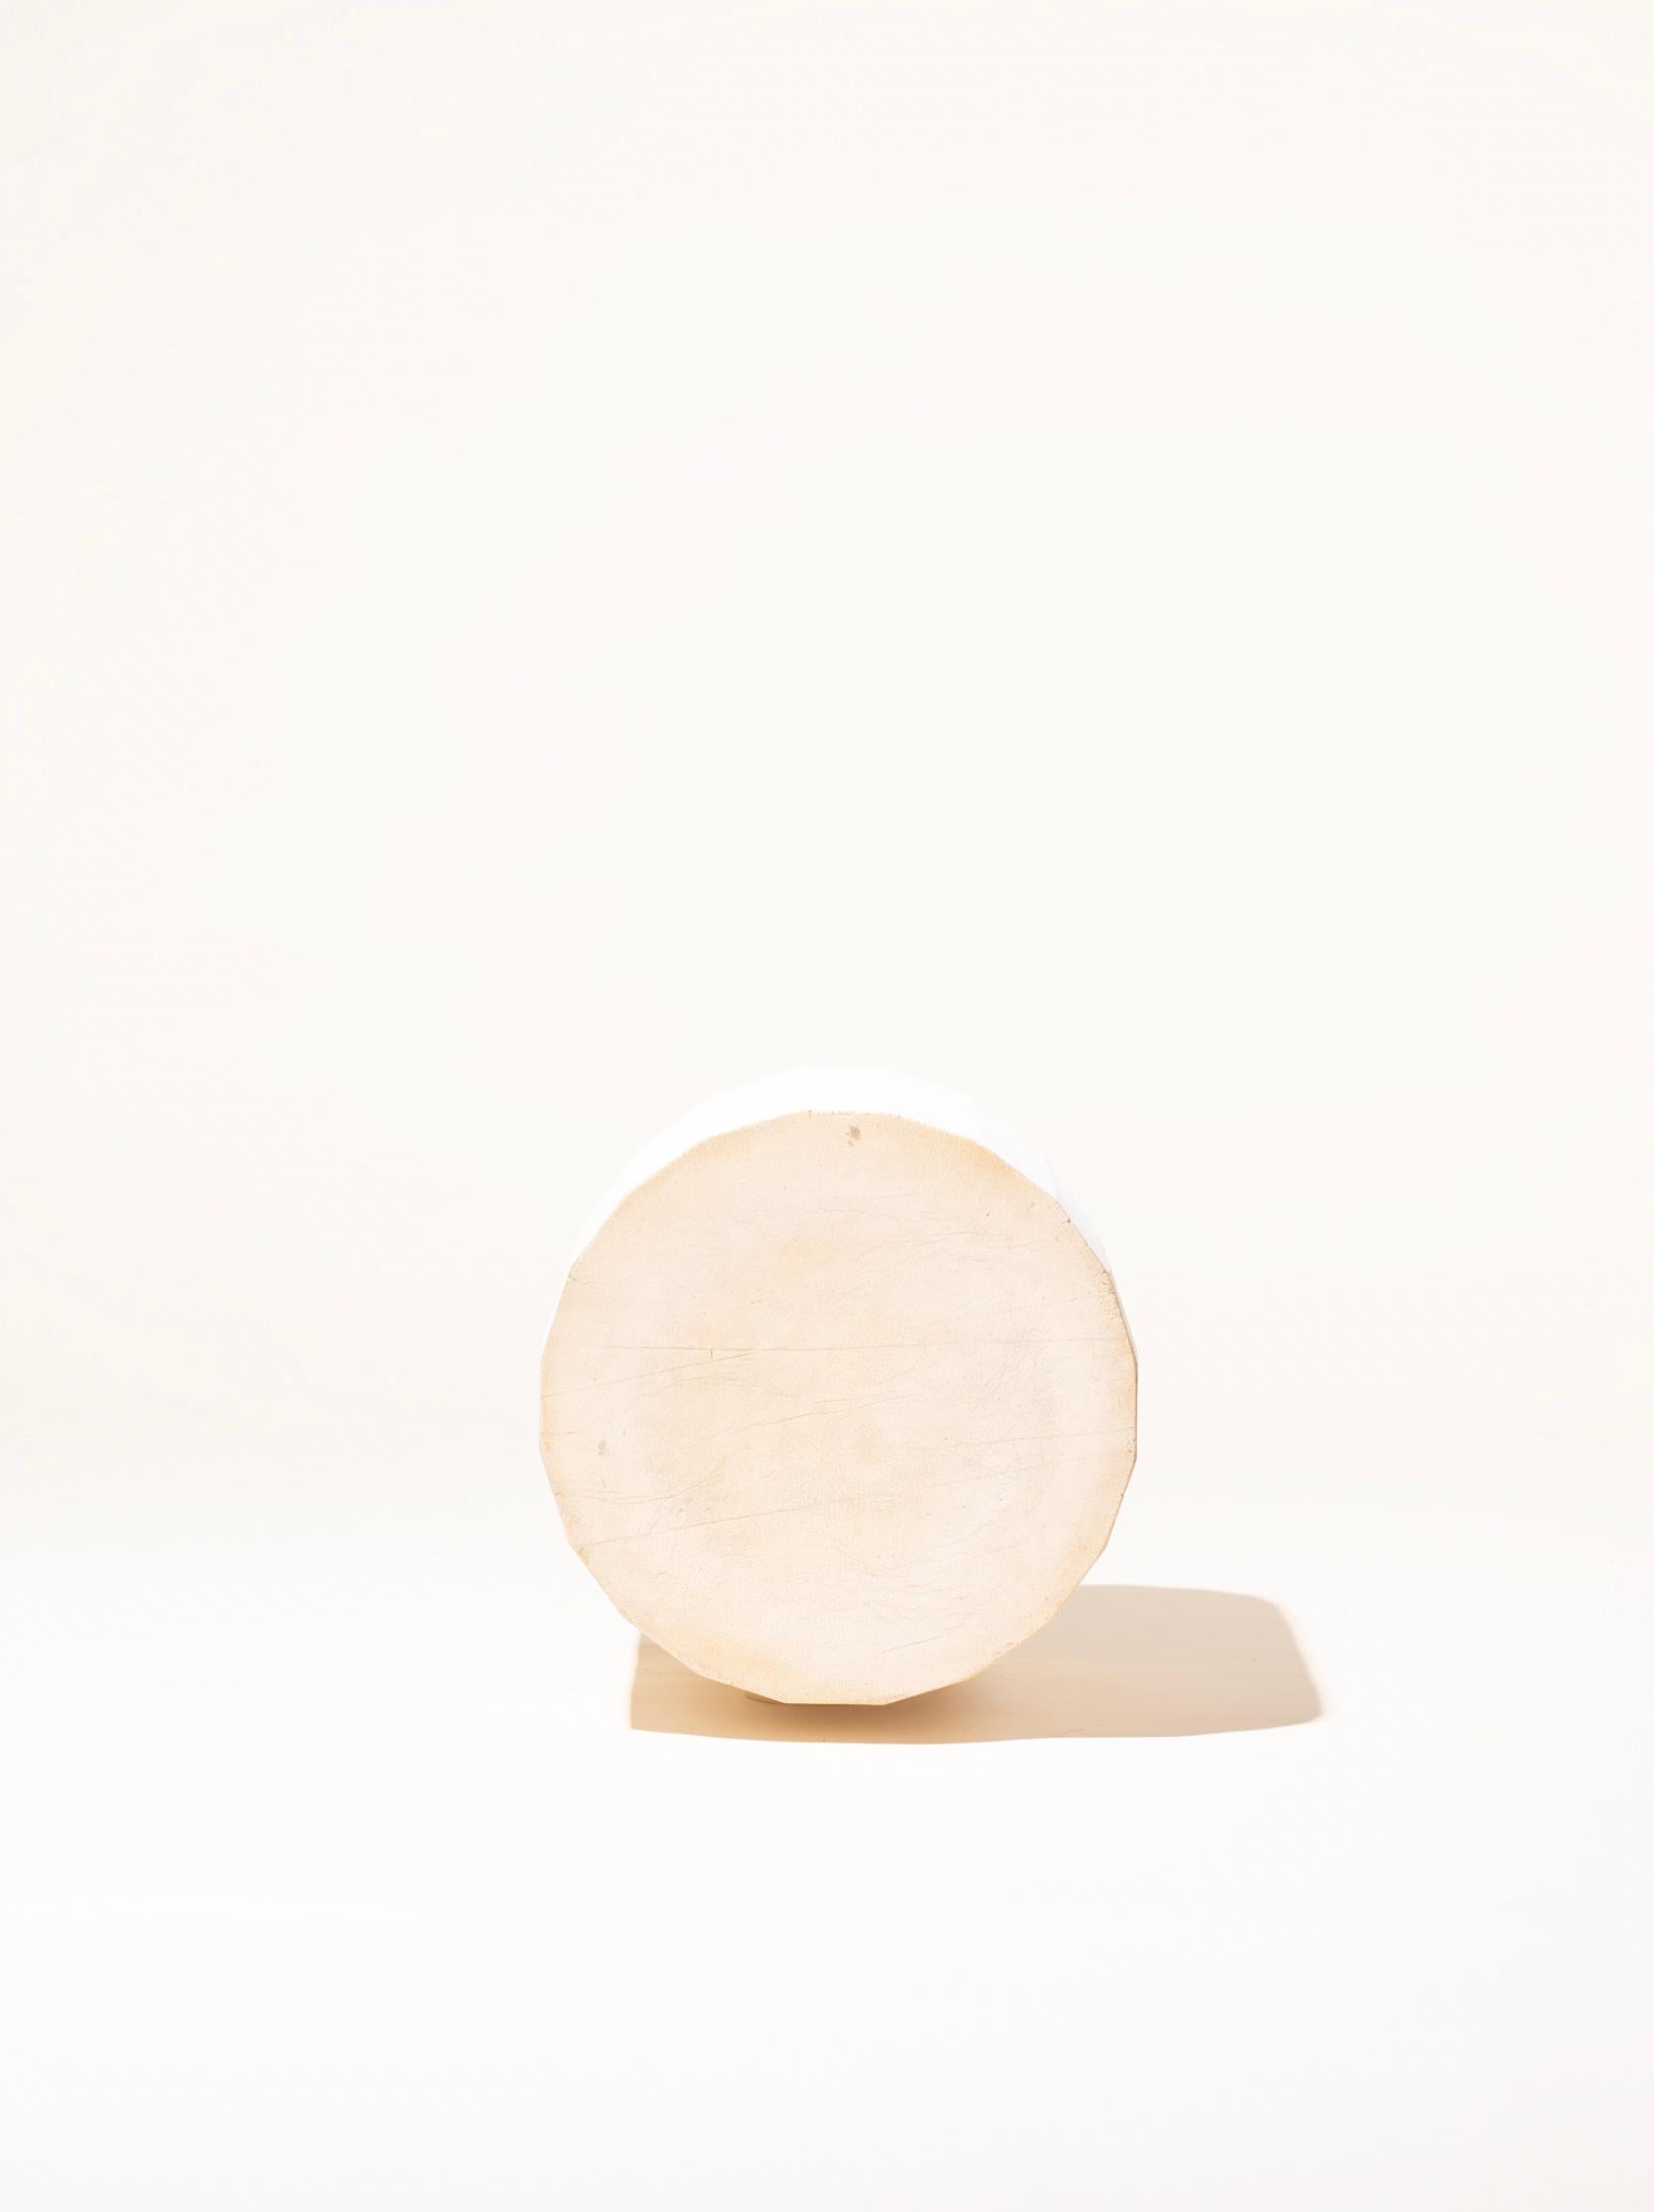 Spanish Contemporary Ceramic Facetated Side Table Column Stool Unglazed Stoneware For Sale